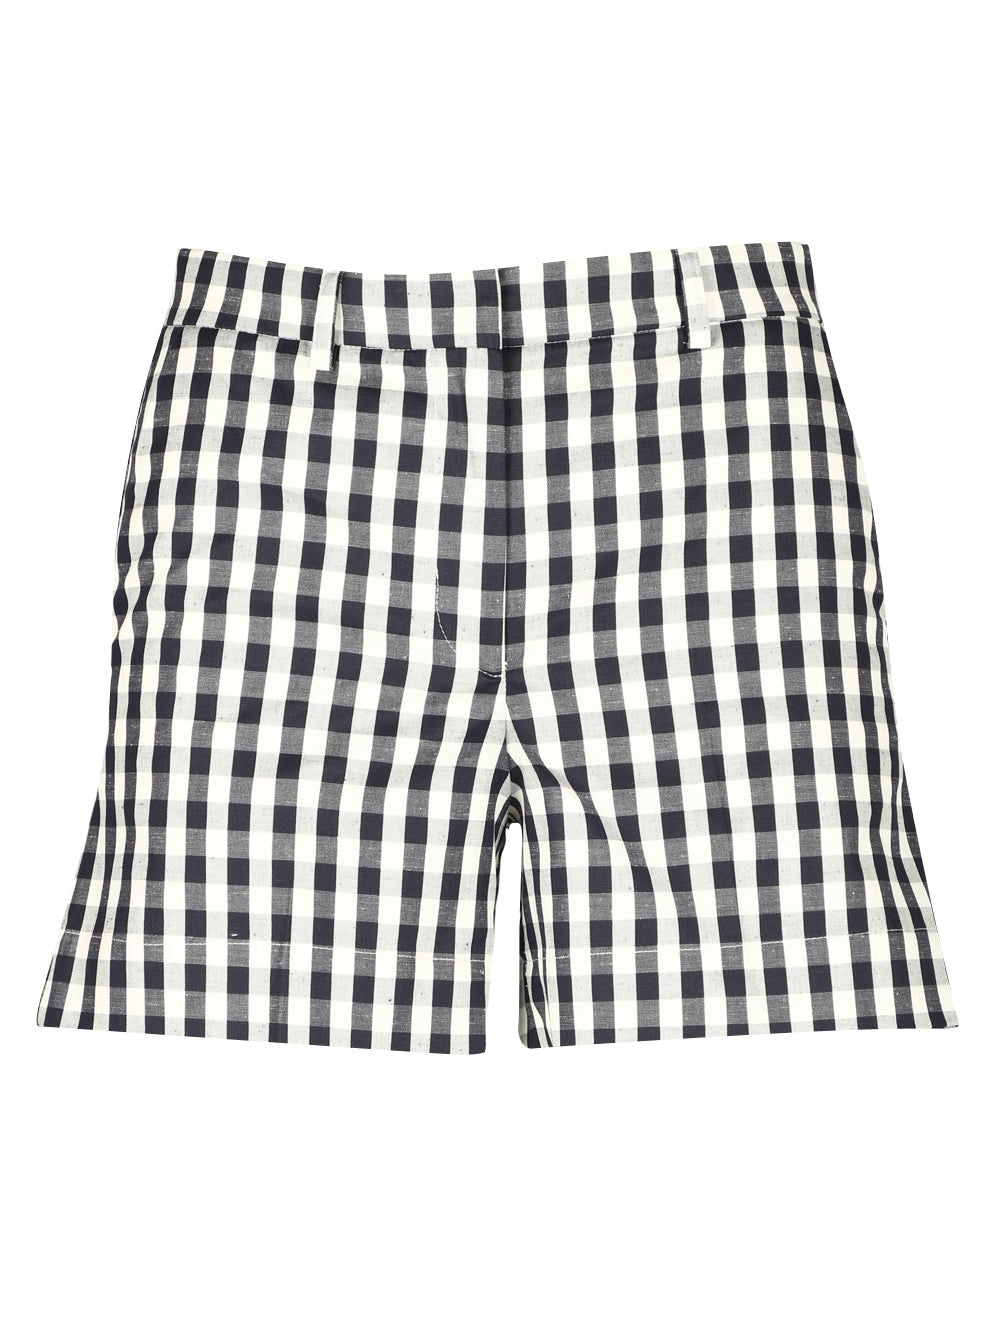 GRIFONI Shorts in Cotone Vichy Bianco e Blu Blu/bianco